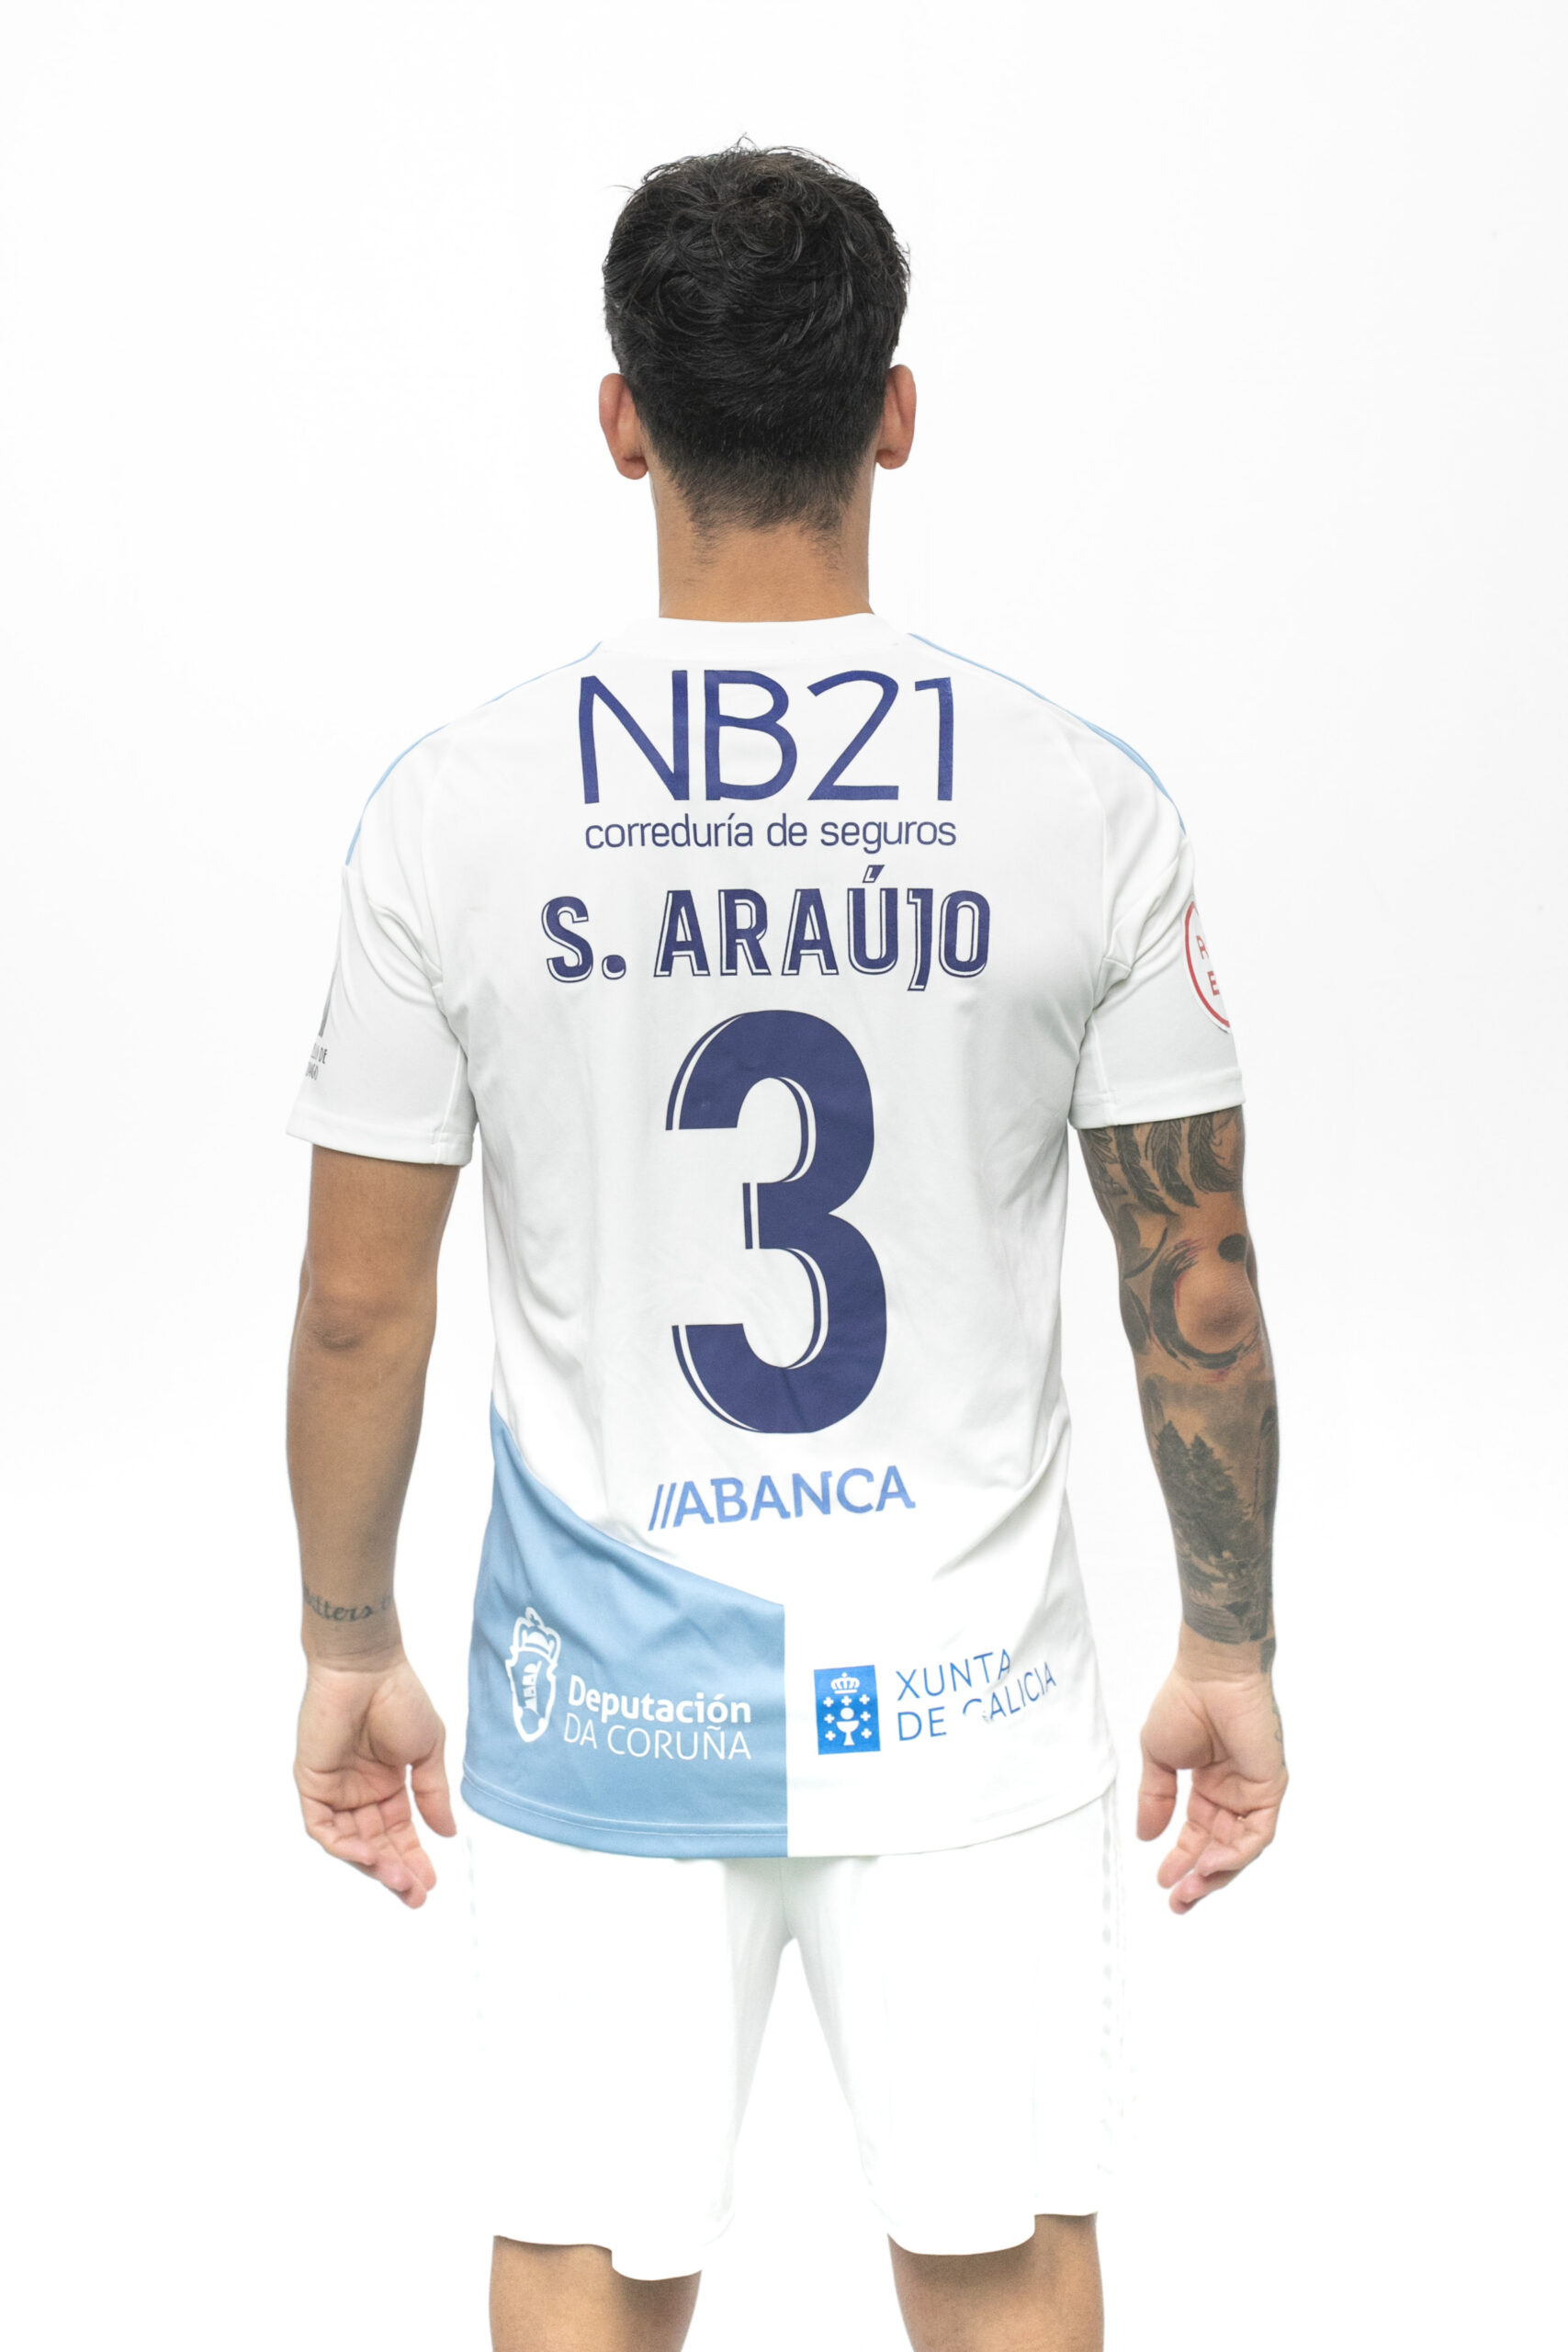 Patrocinador NB21 Correduría